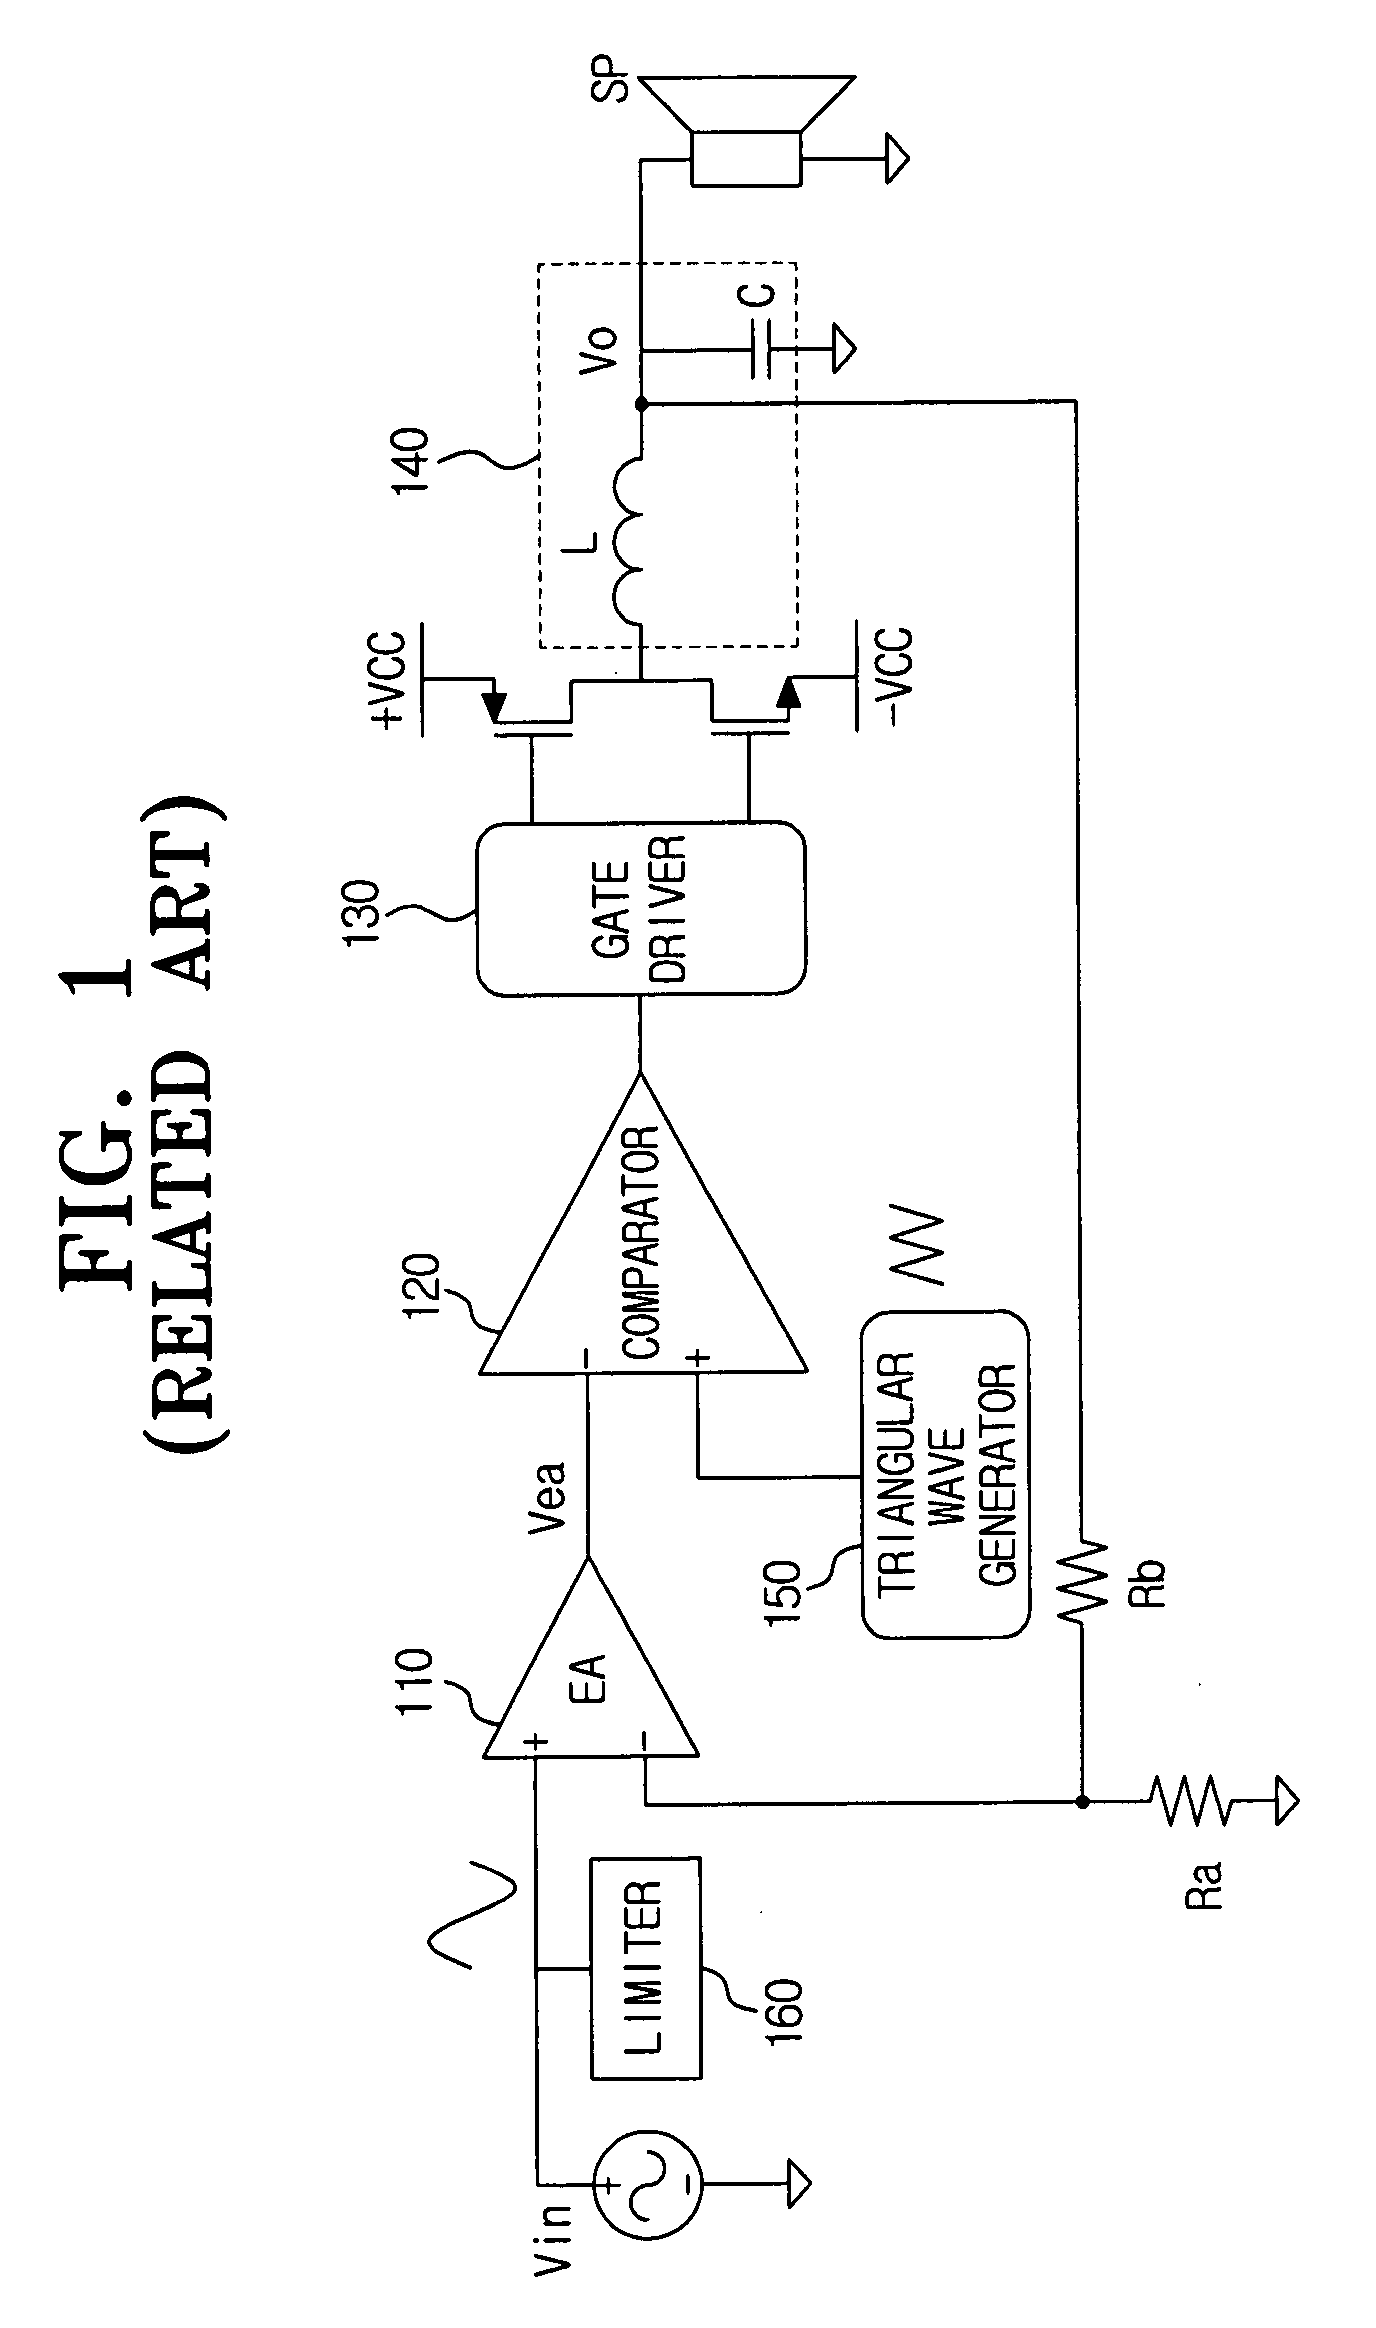 Input-gain control apparatus and method